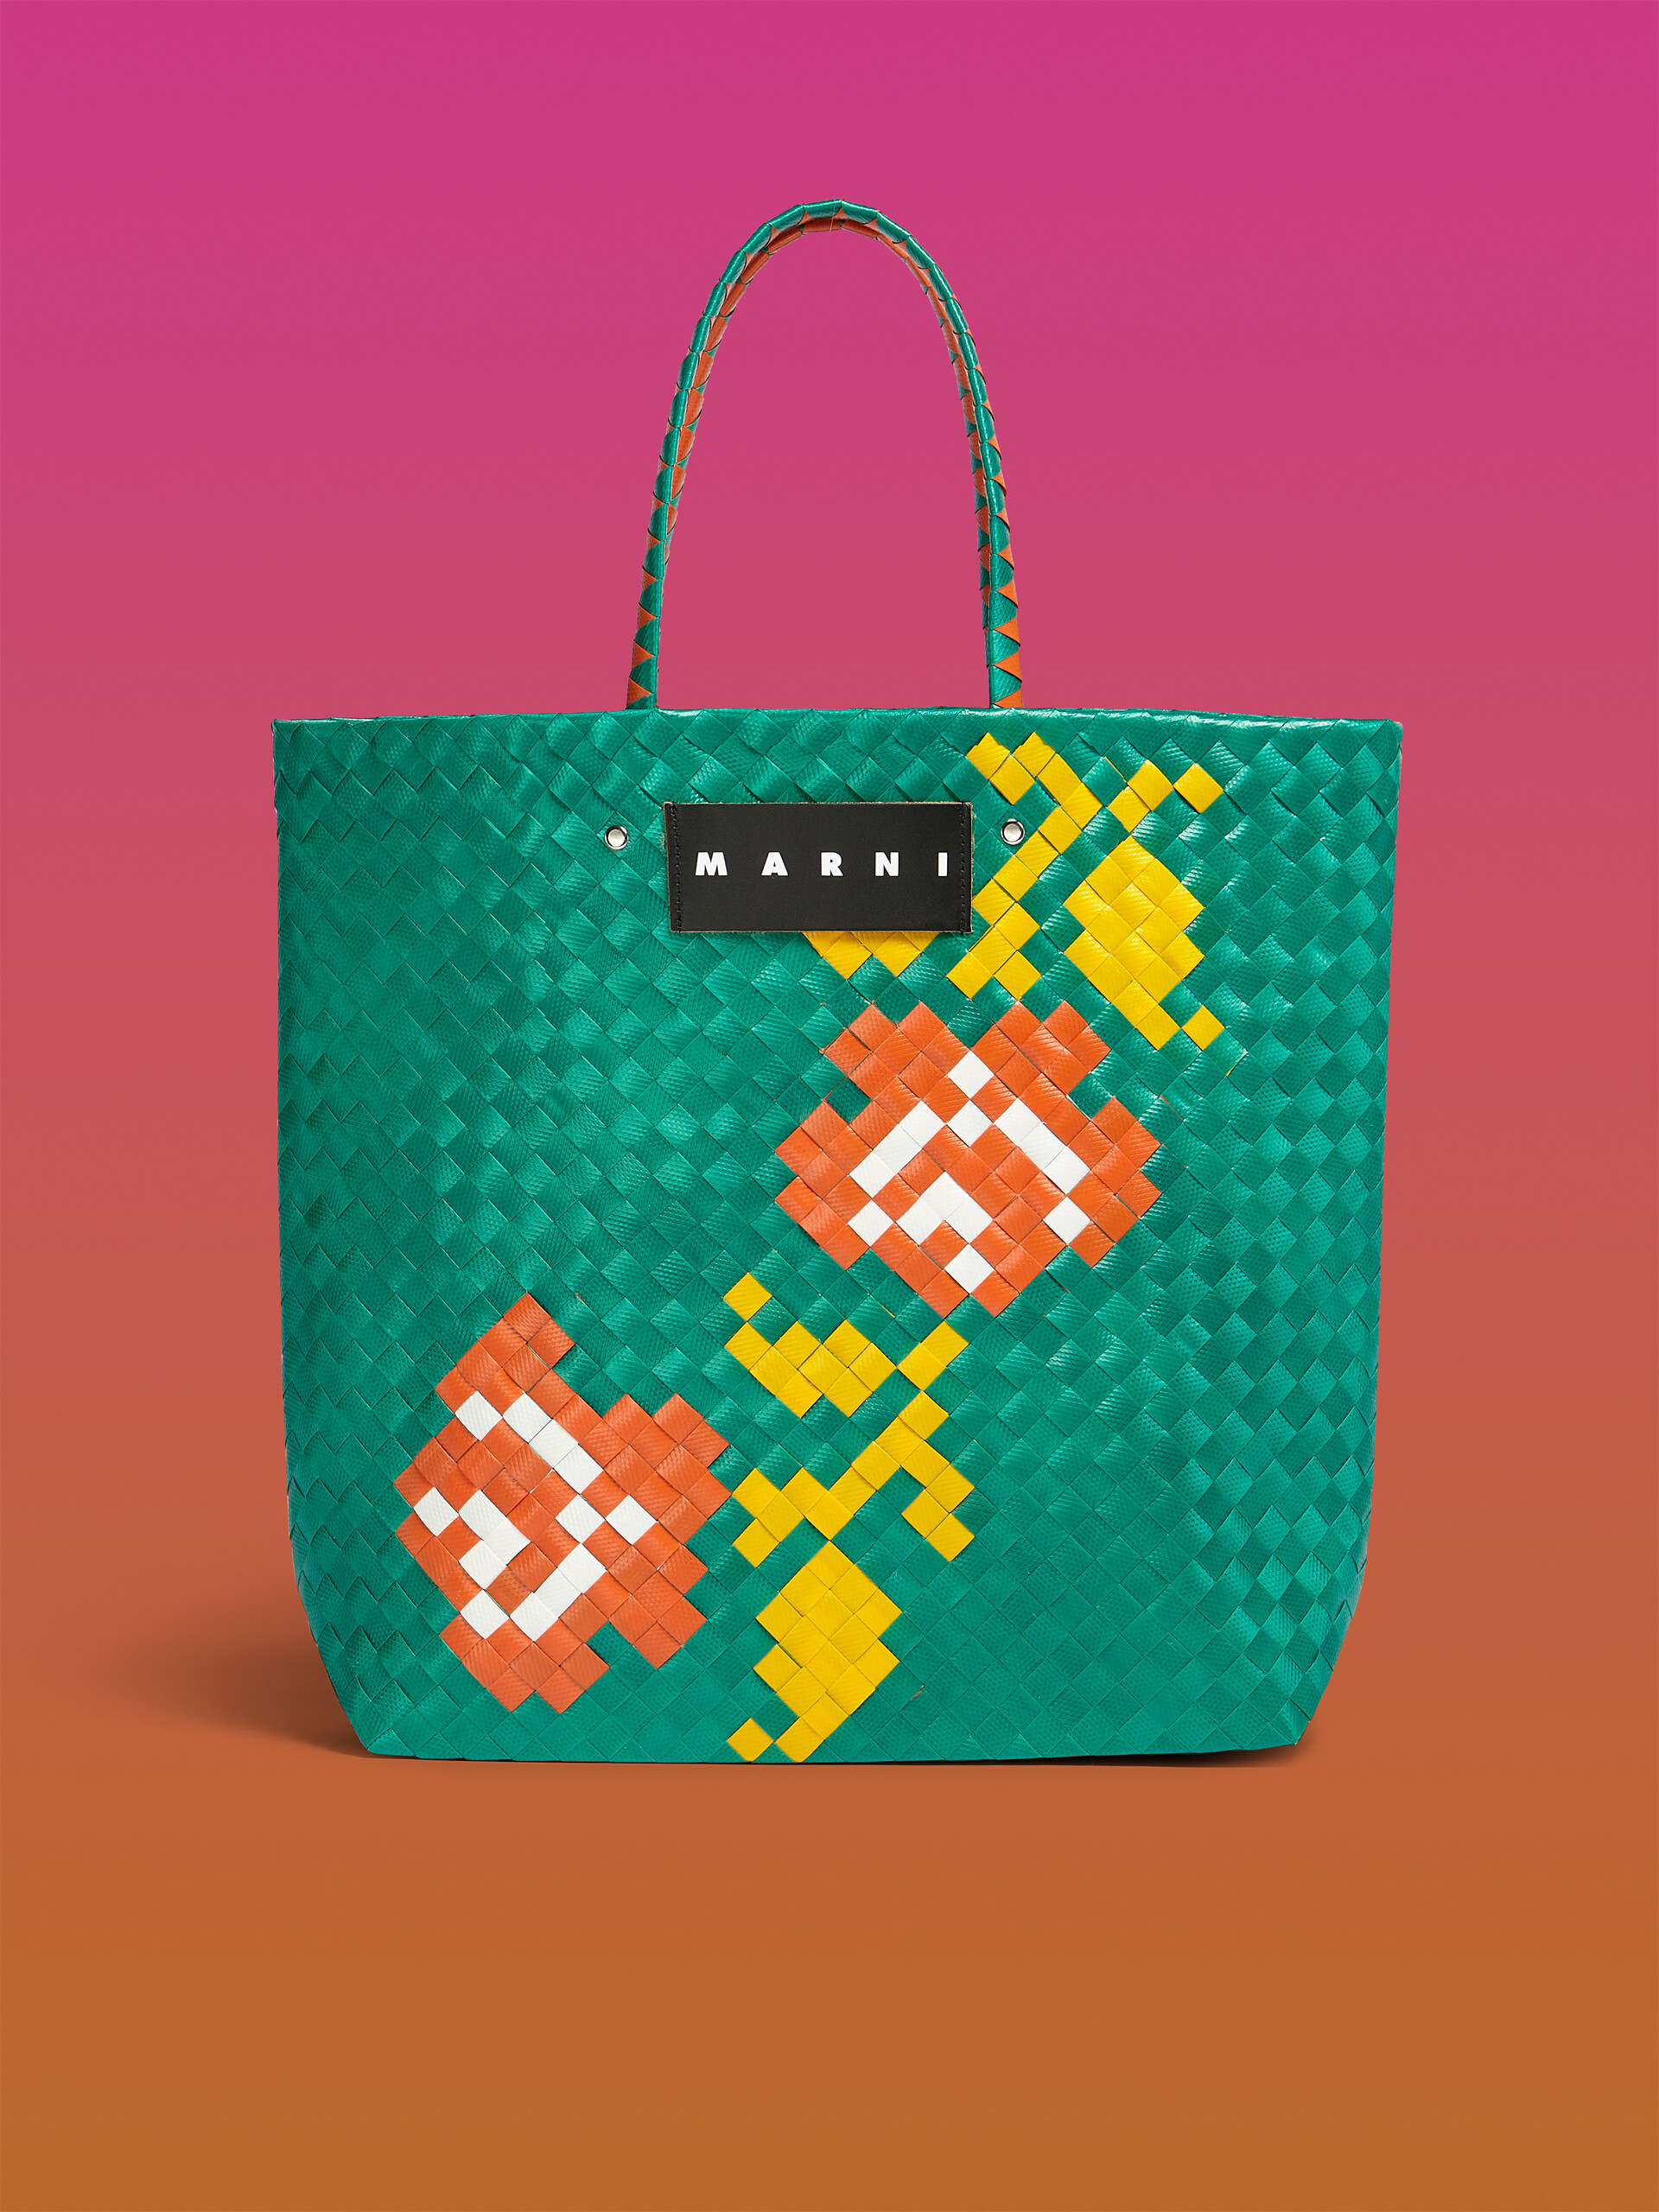 MARNI MARKET medium bag in green flower motif - Bags - Image 1